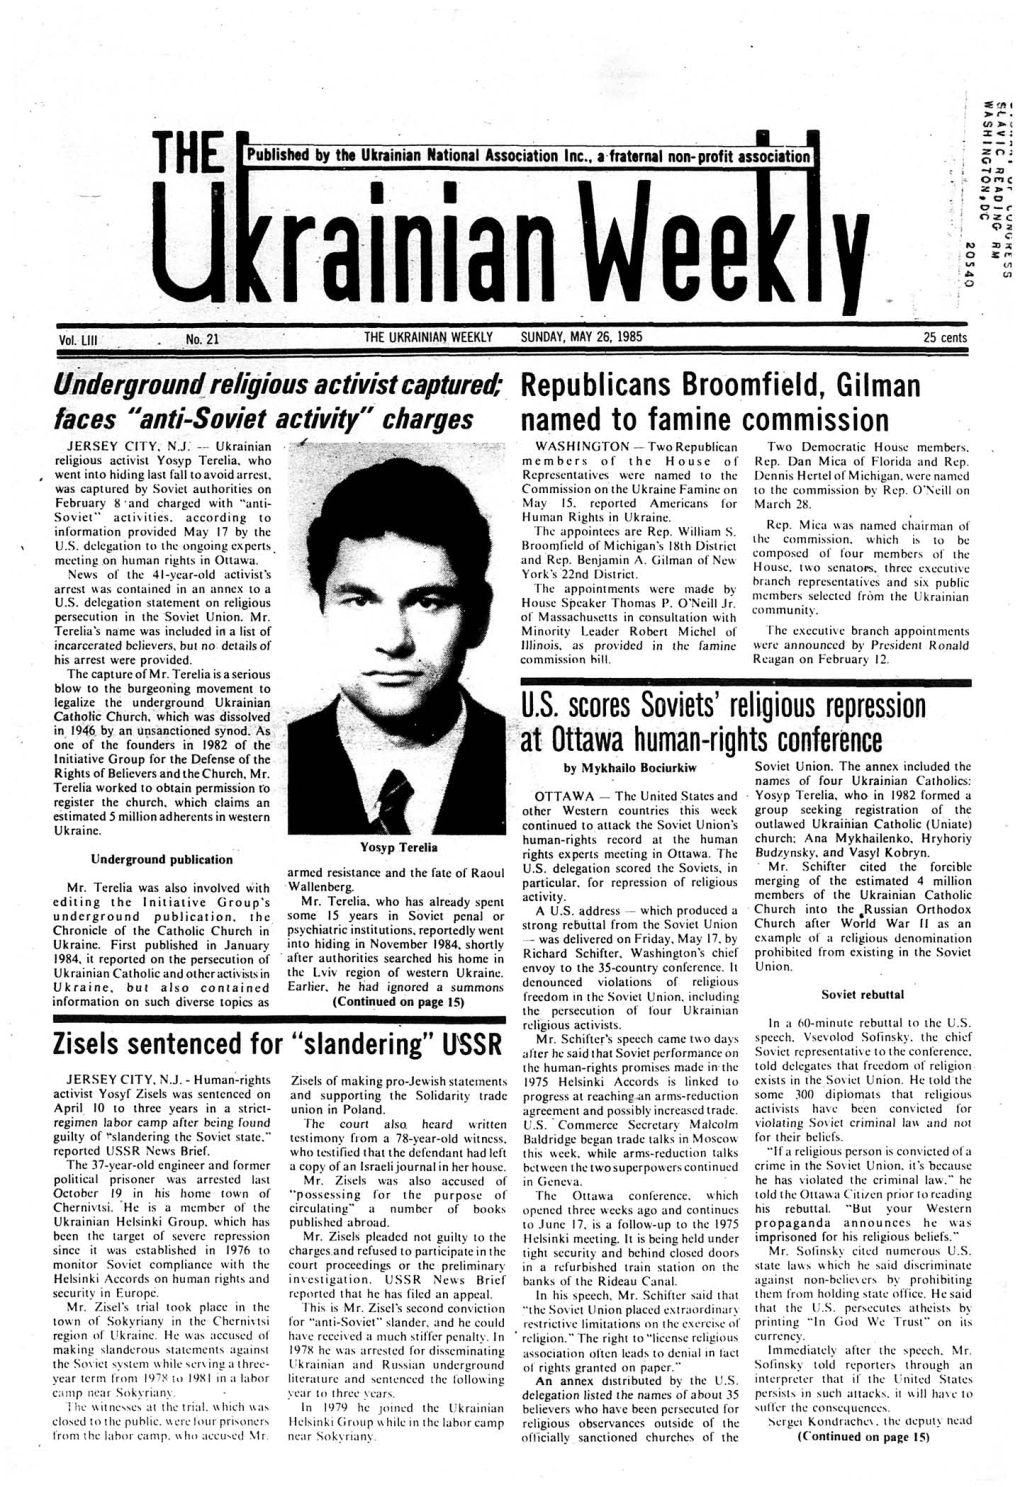 The Ukrainian Weekly 1985, No.21